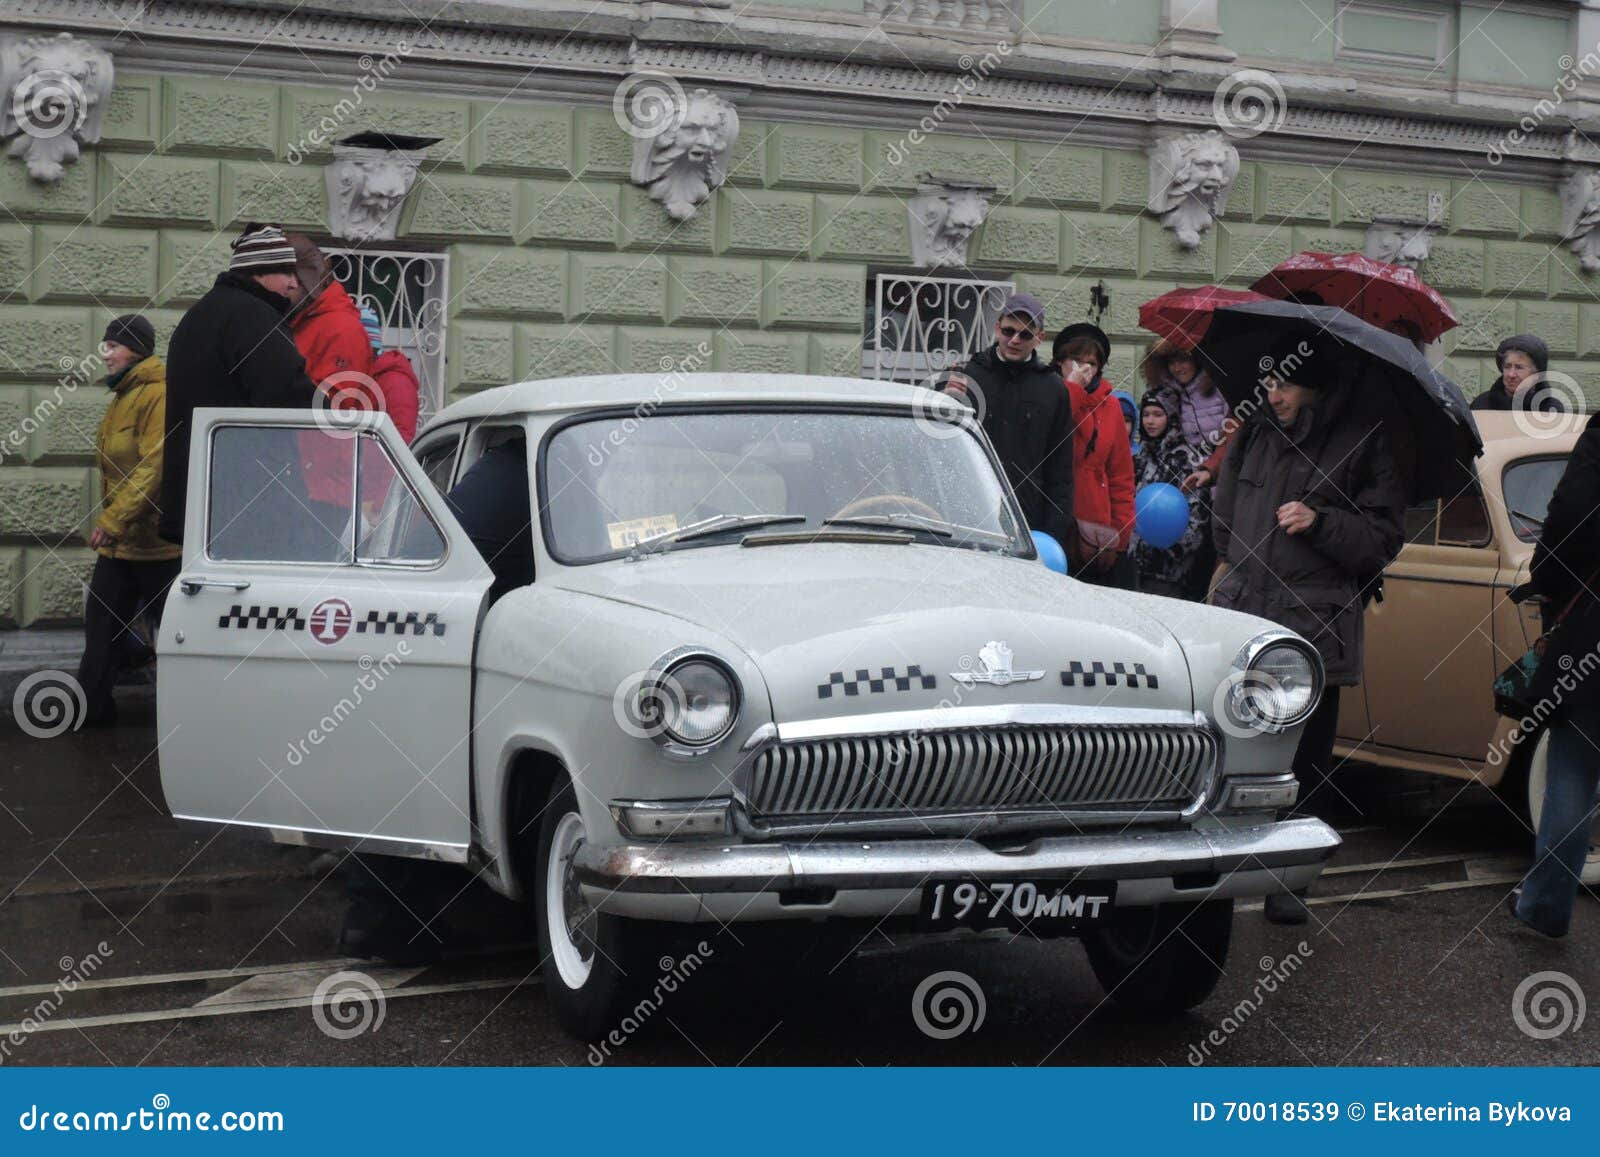 Retro Russian taxi car editorial stock image